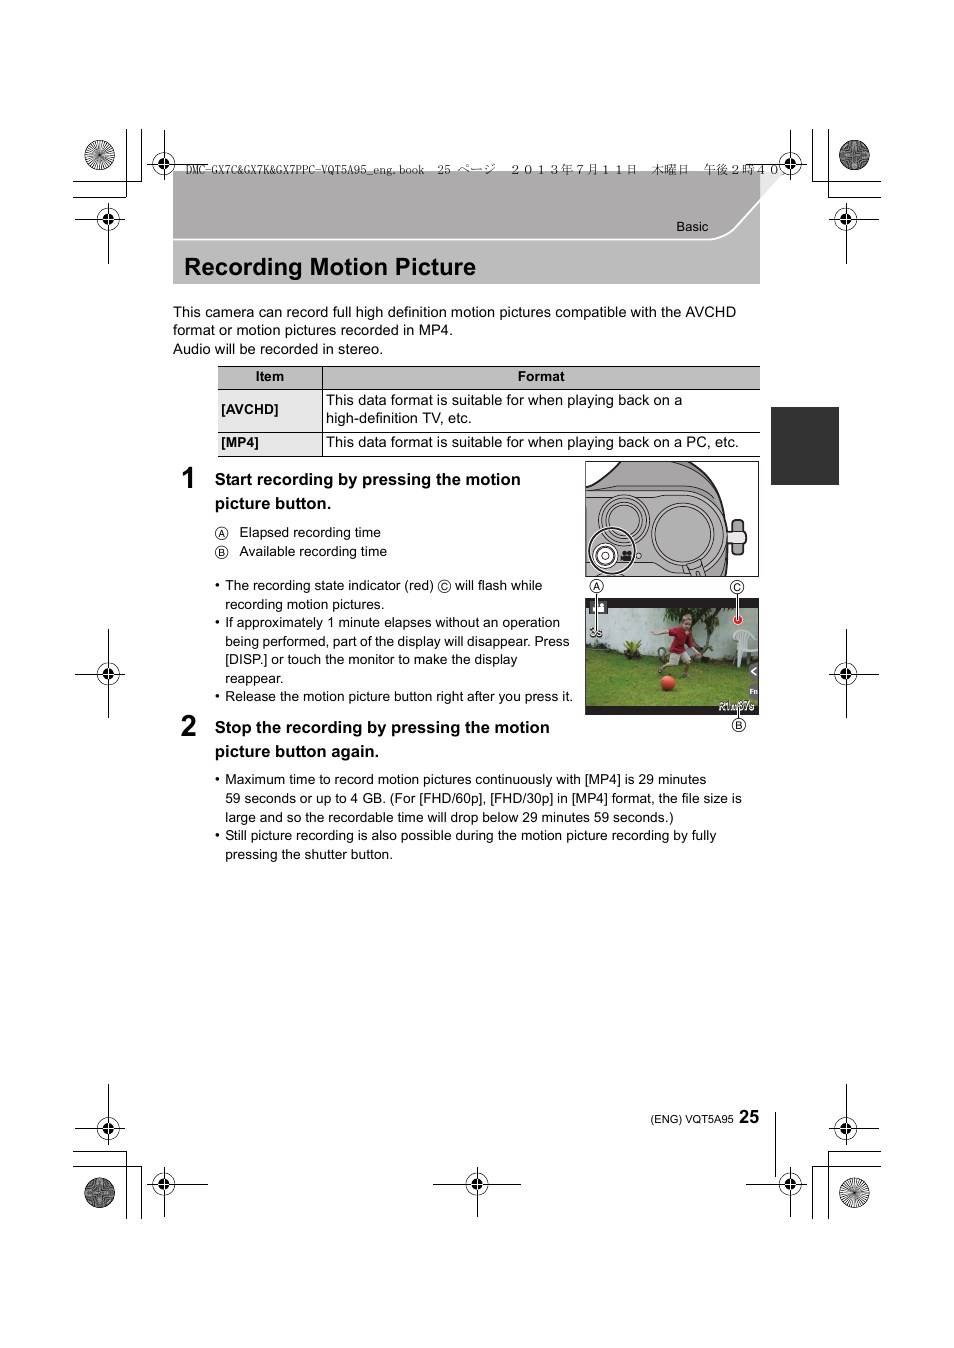 Recording motion picture | Panasonic DMC-GX7SBODY User Manual | Page 25 / 104